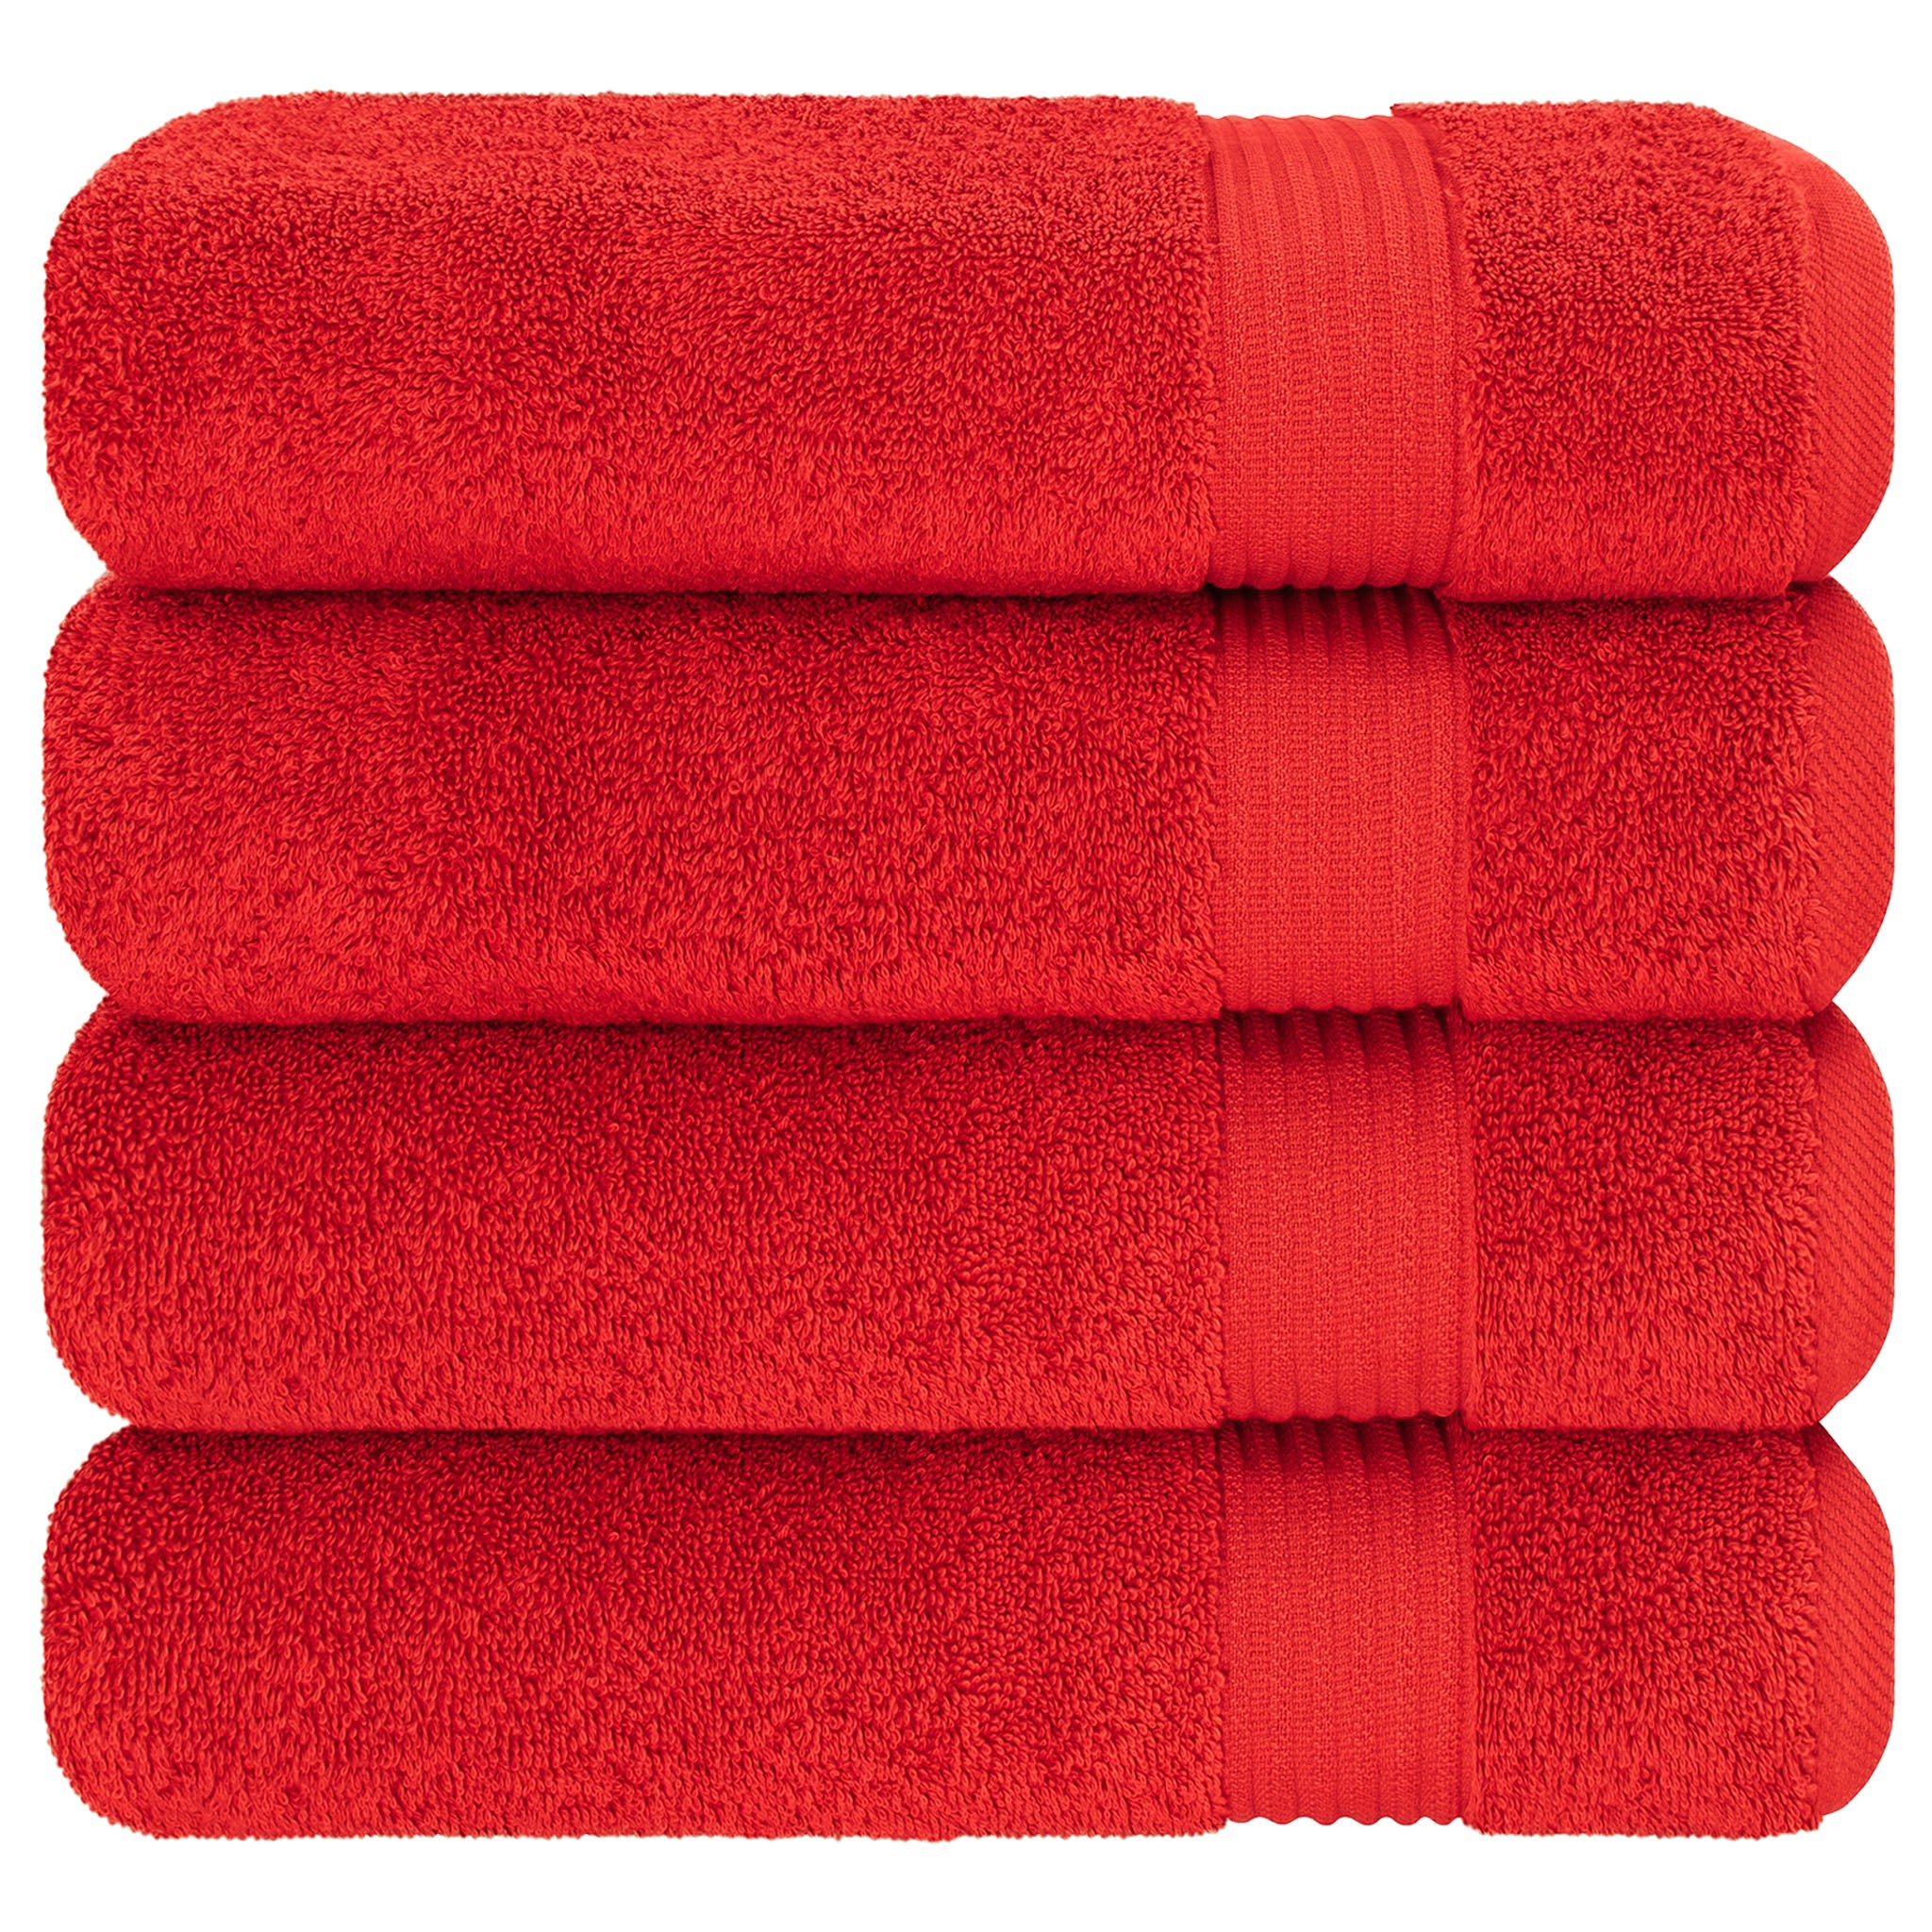 American Soft Linen Bekos 100% Cotton Turkish Towels, 4 Piece Bath Towel Set -red-06